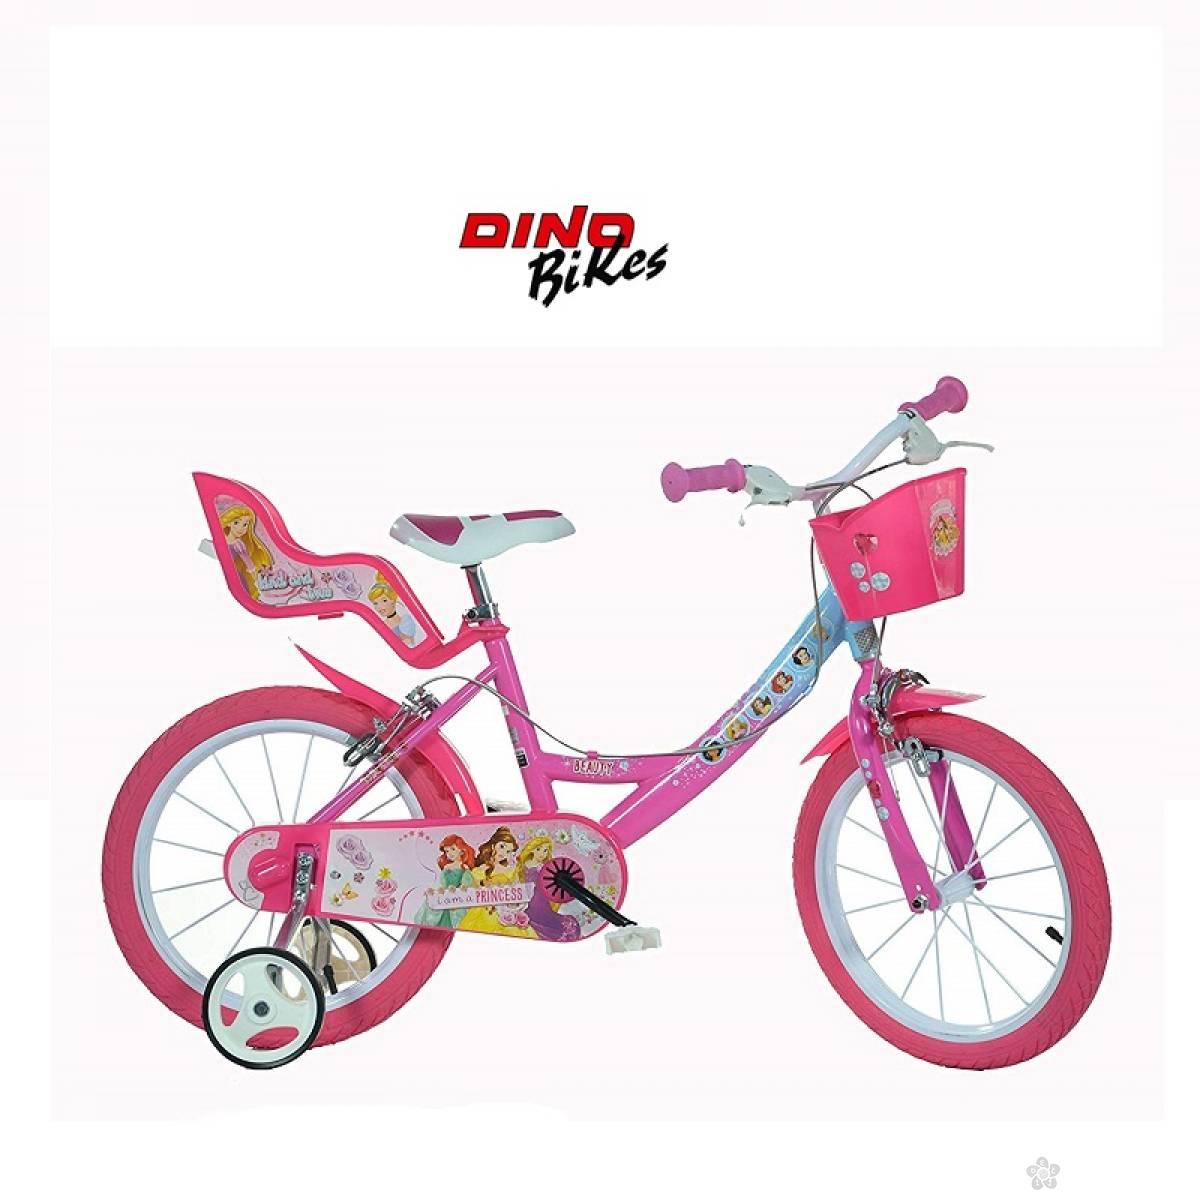 Bicikl za decu AIAR model 714-12 SREBRNI 